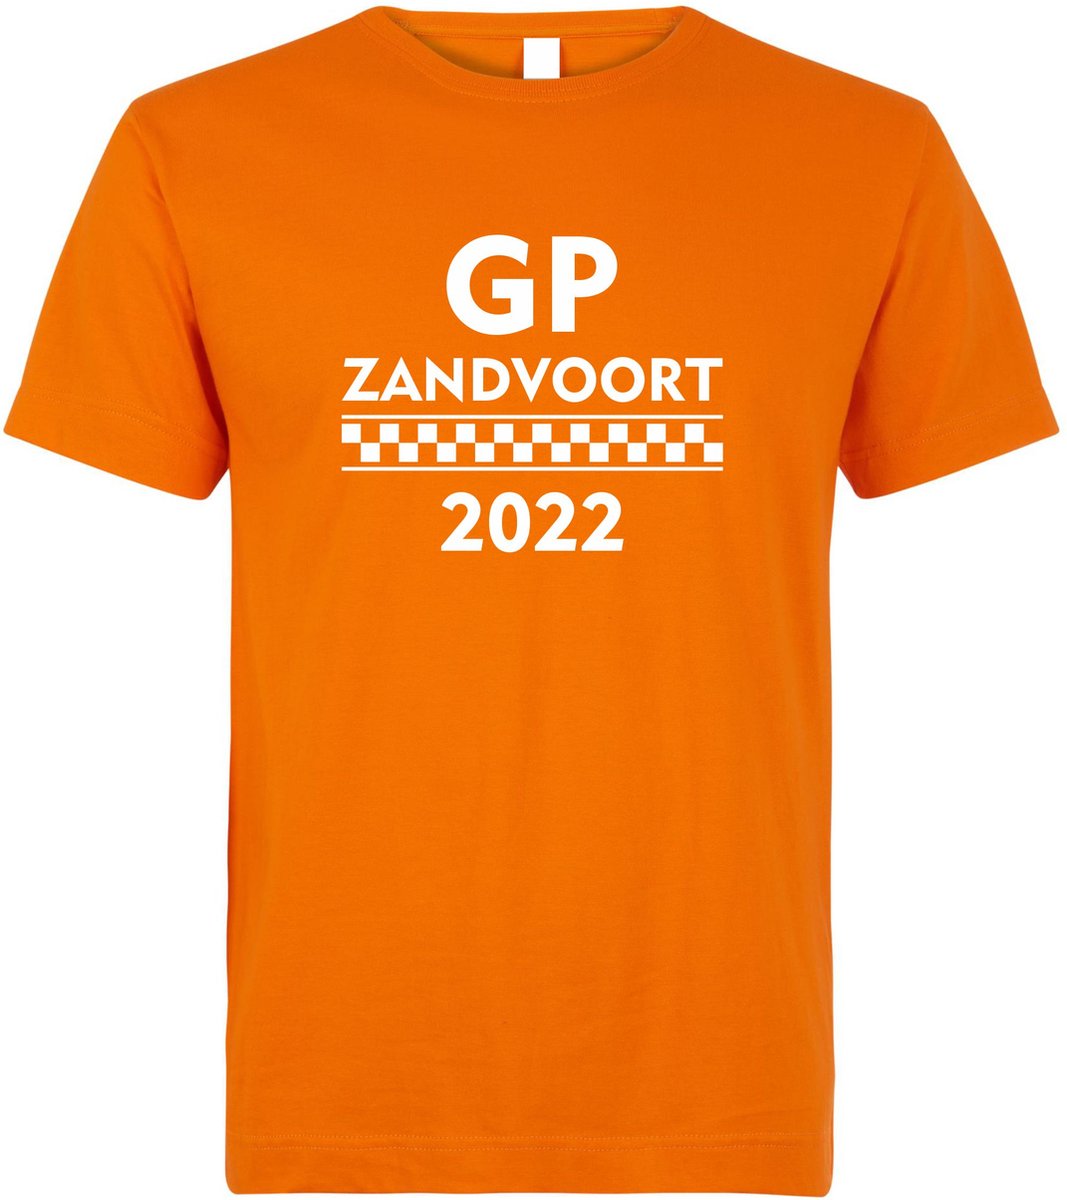 T-shirt GP Zandvoort 2022 | Max Verstappen / Red Bull Racing / Formule 1 fan | Grand Prix Circuit Zandvoort | kleding shirt | Oranje | maat M